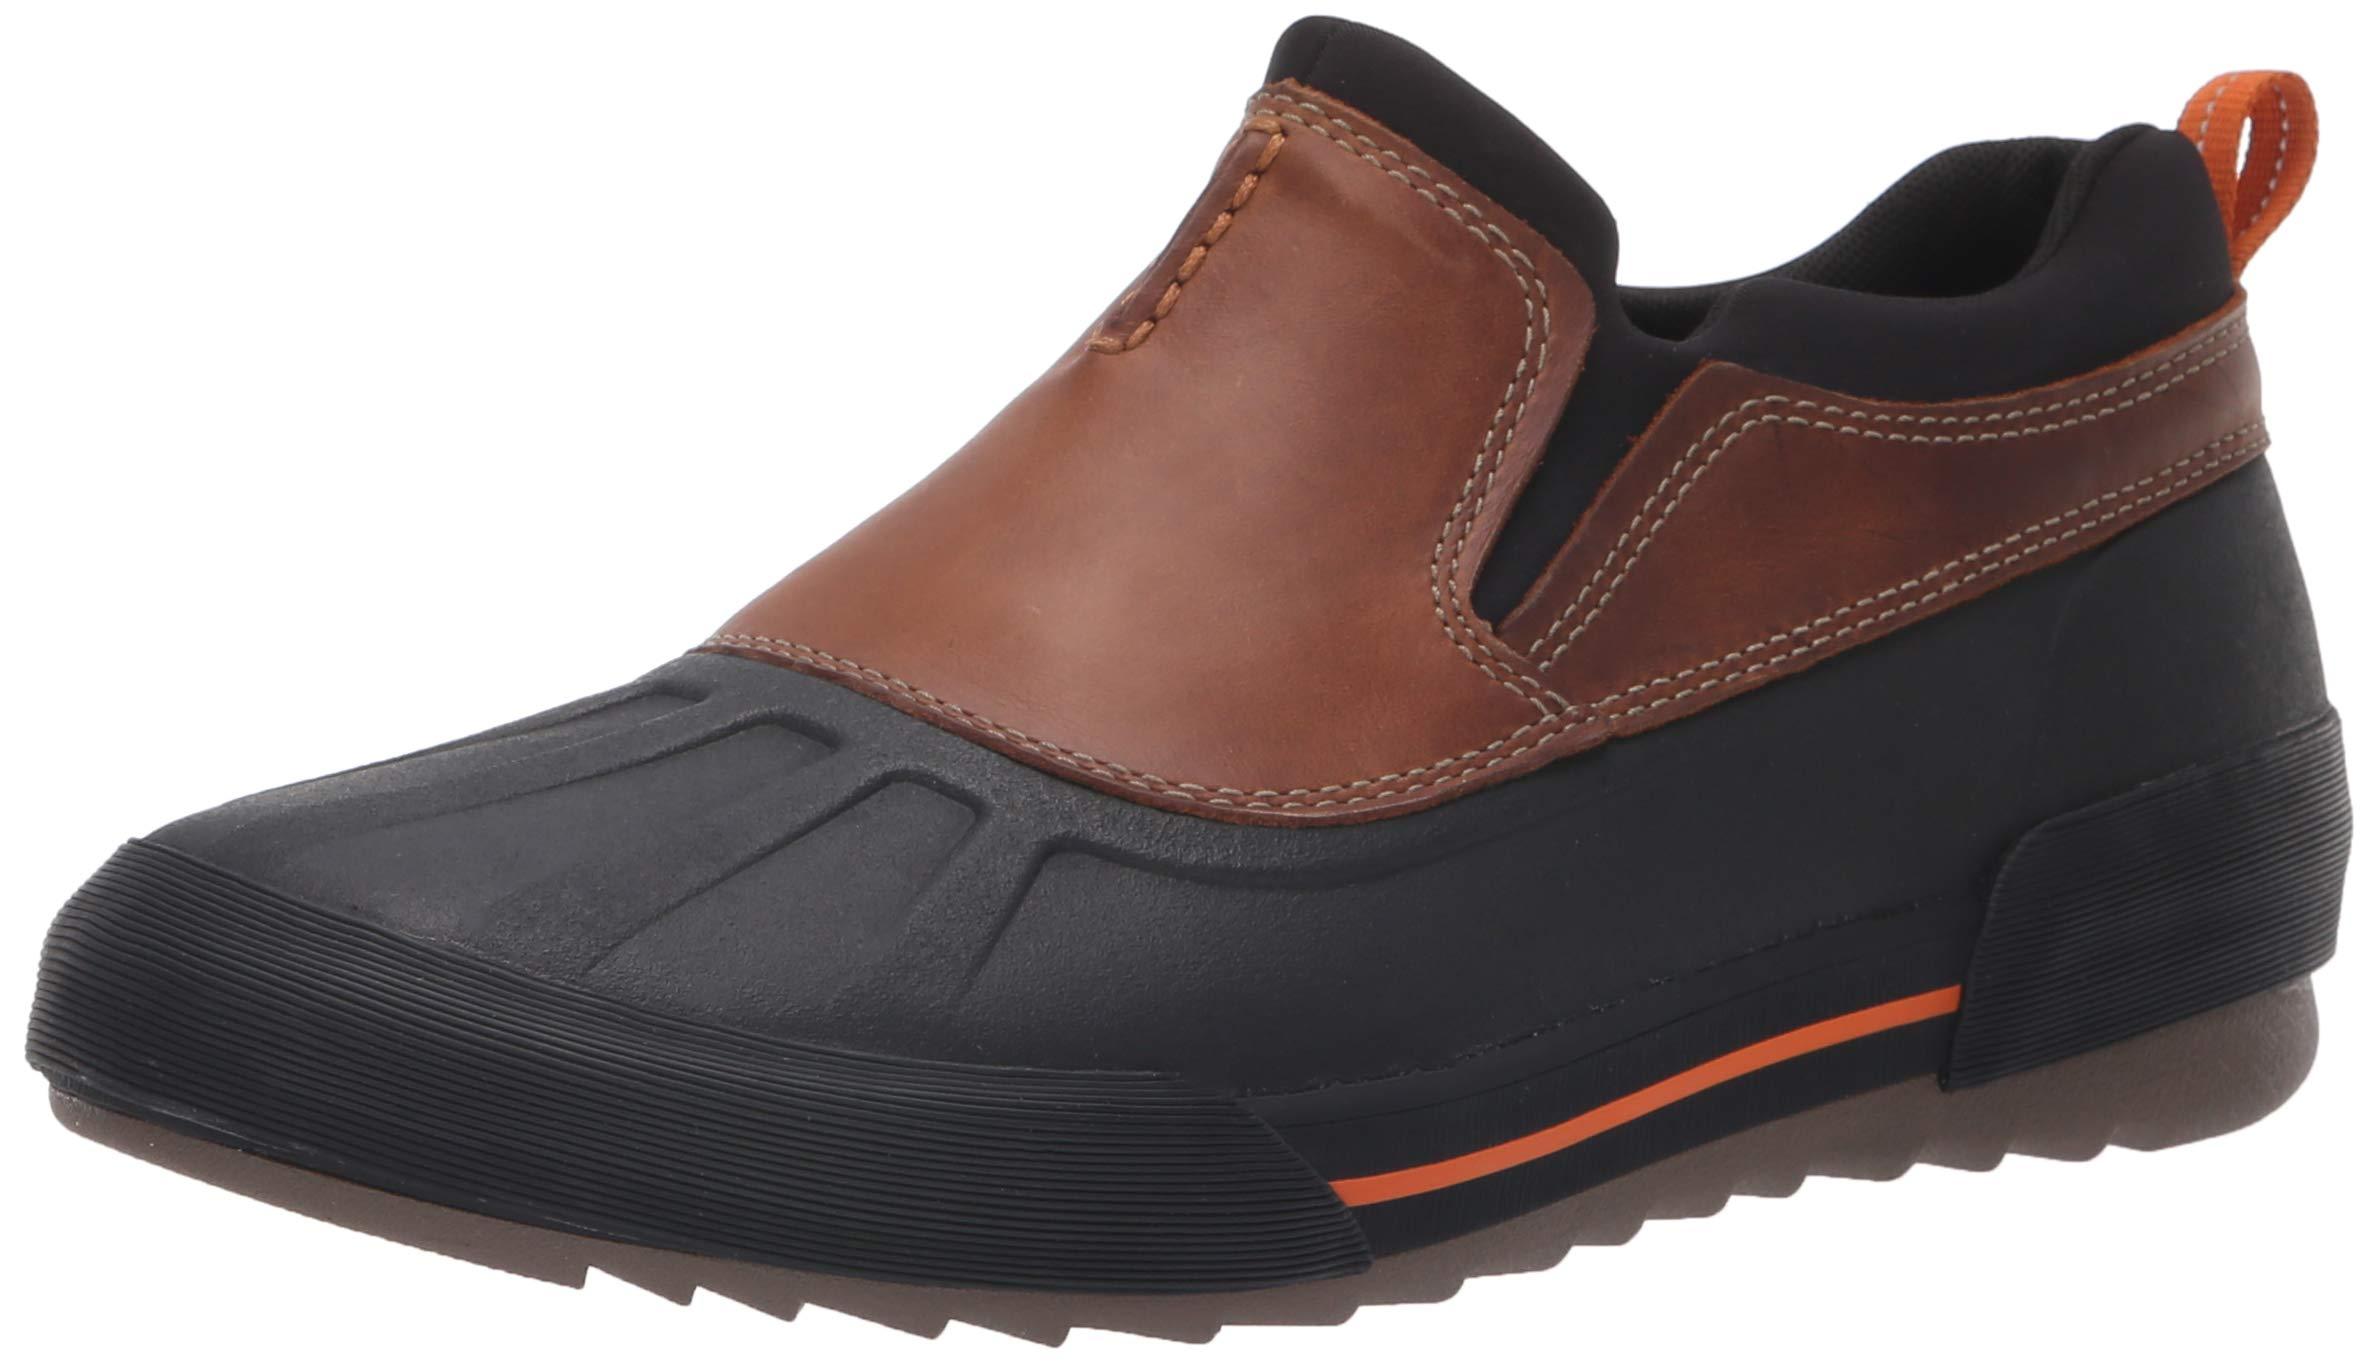 Clarks Men's Bowman Free Rain Shoe Flash Sales, SAVE 36% - mpgc.net